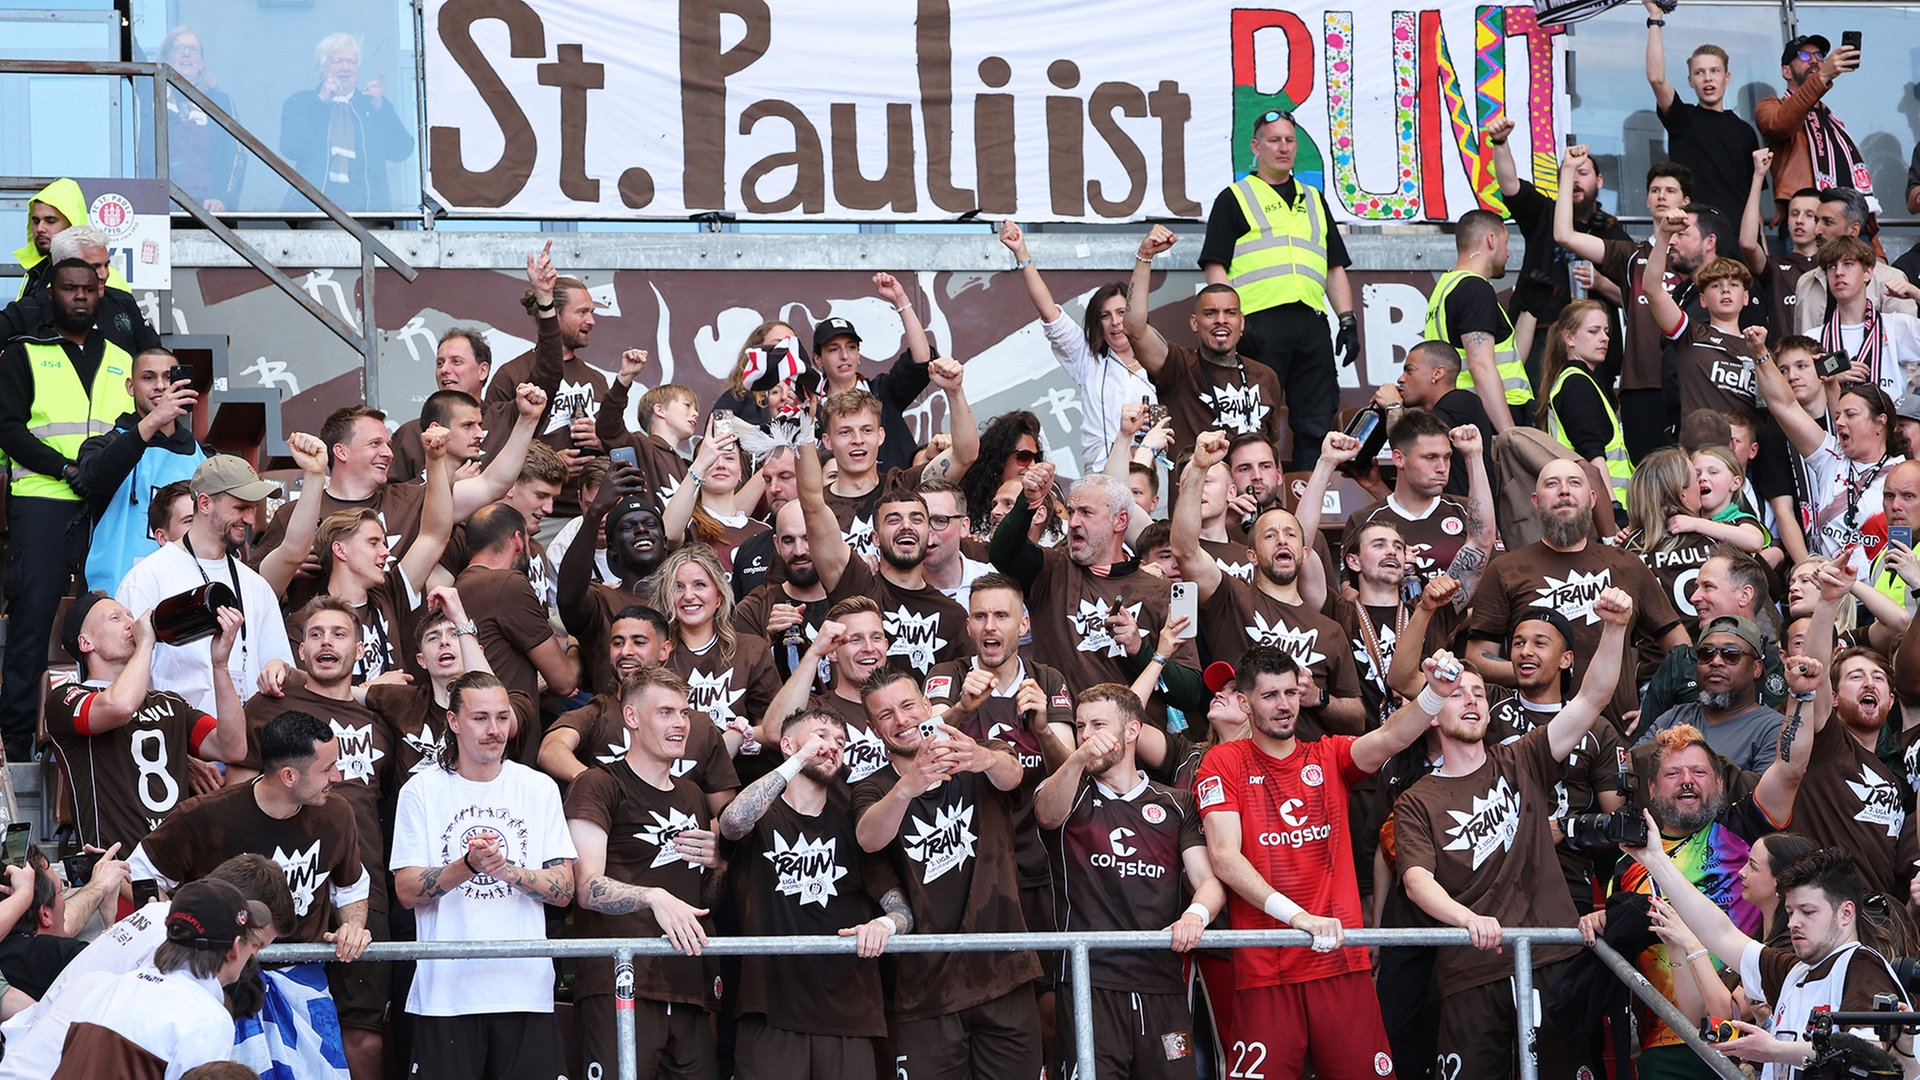 Demo, Rathaus, Festival: So feiert St. Pauli heute den Bundesliga-Aufstieg